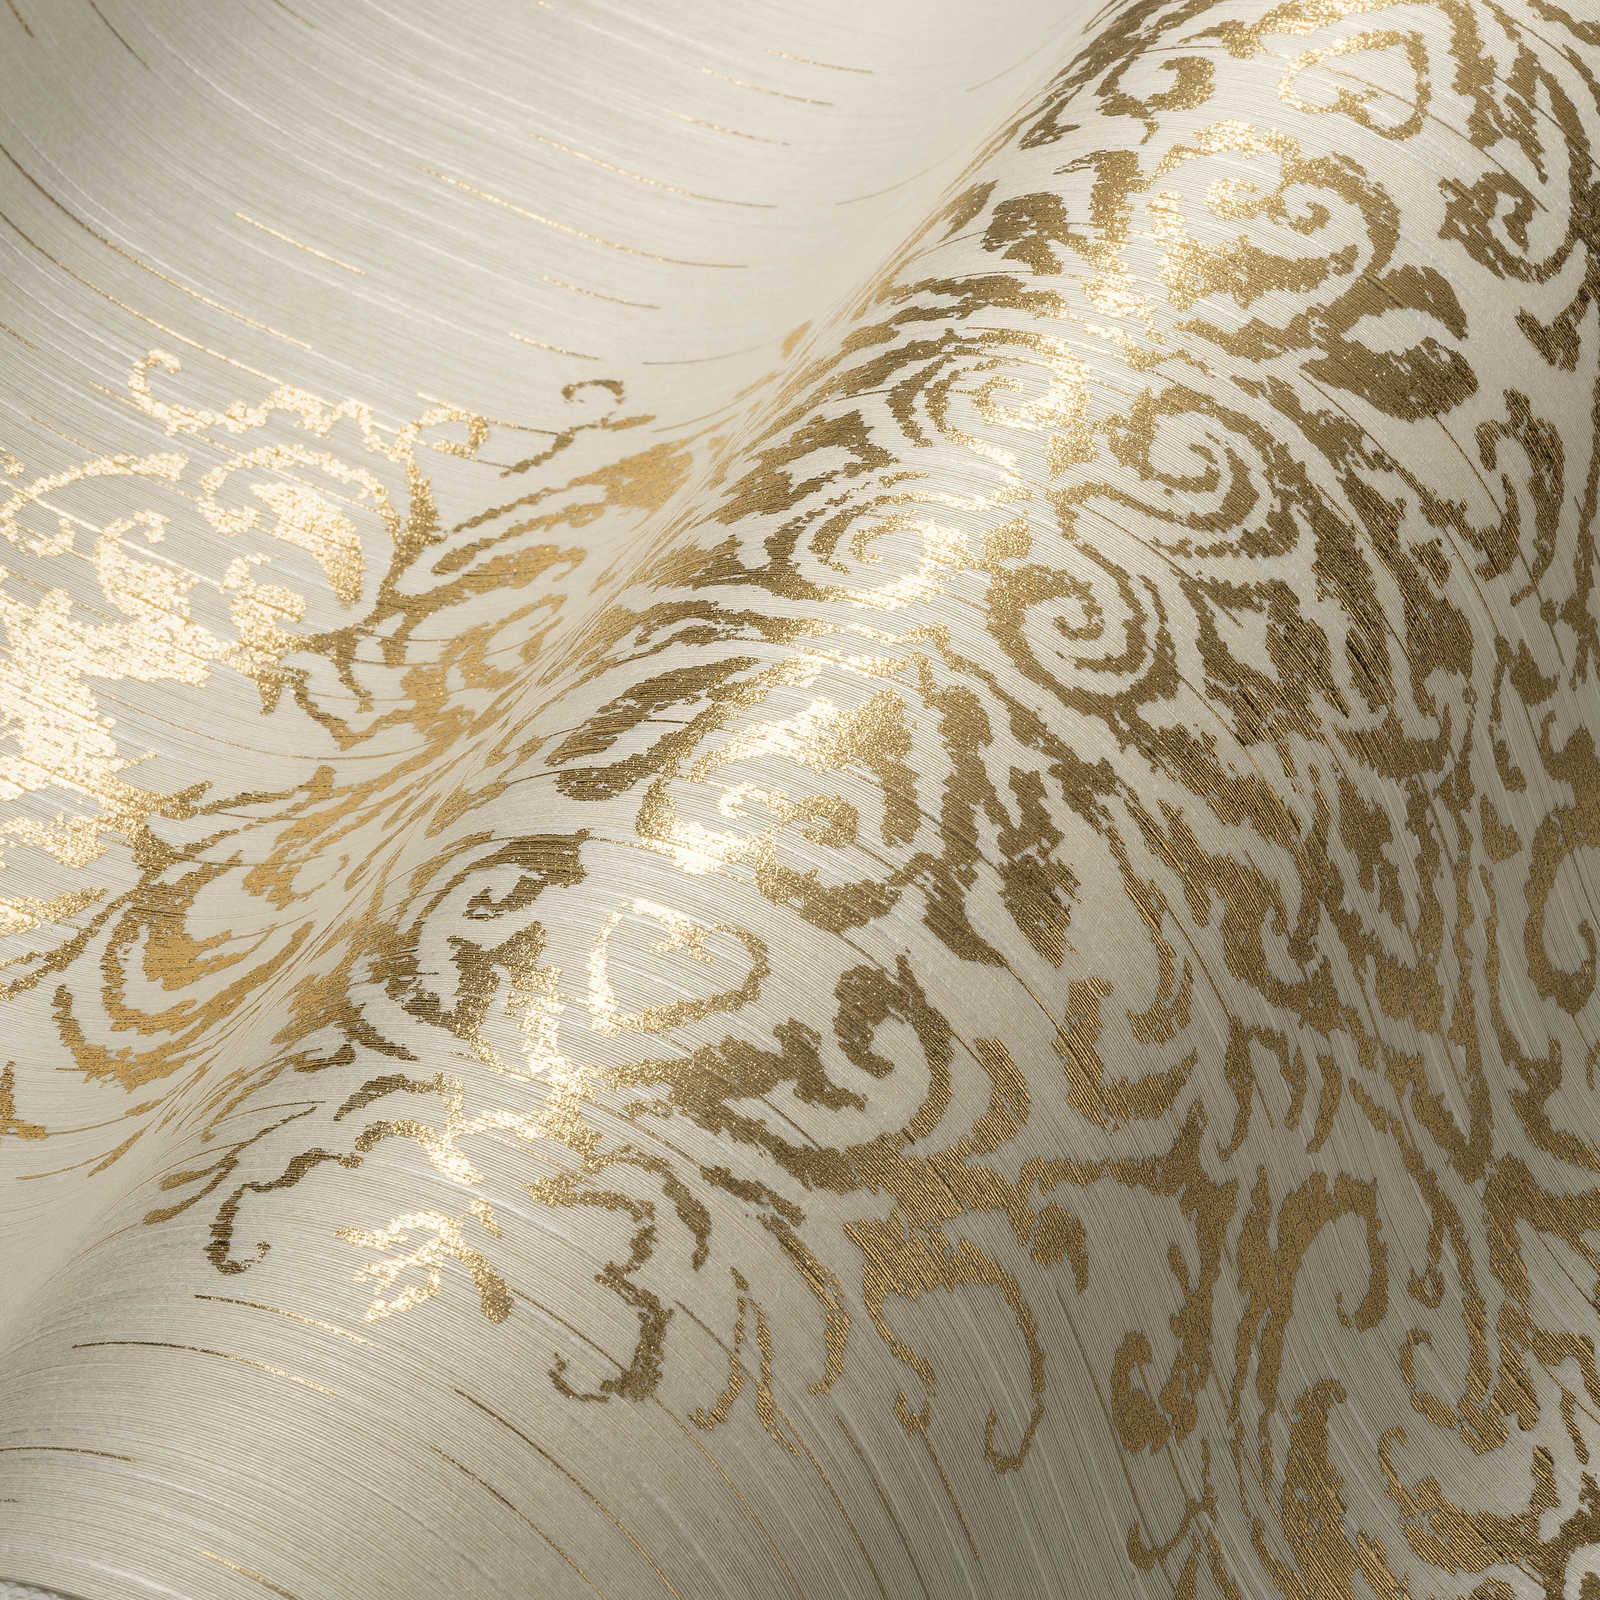             Ornament-Tapete mit Metallic-Effekt im Used-Look – Creme, Gold
        